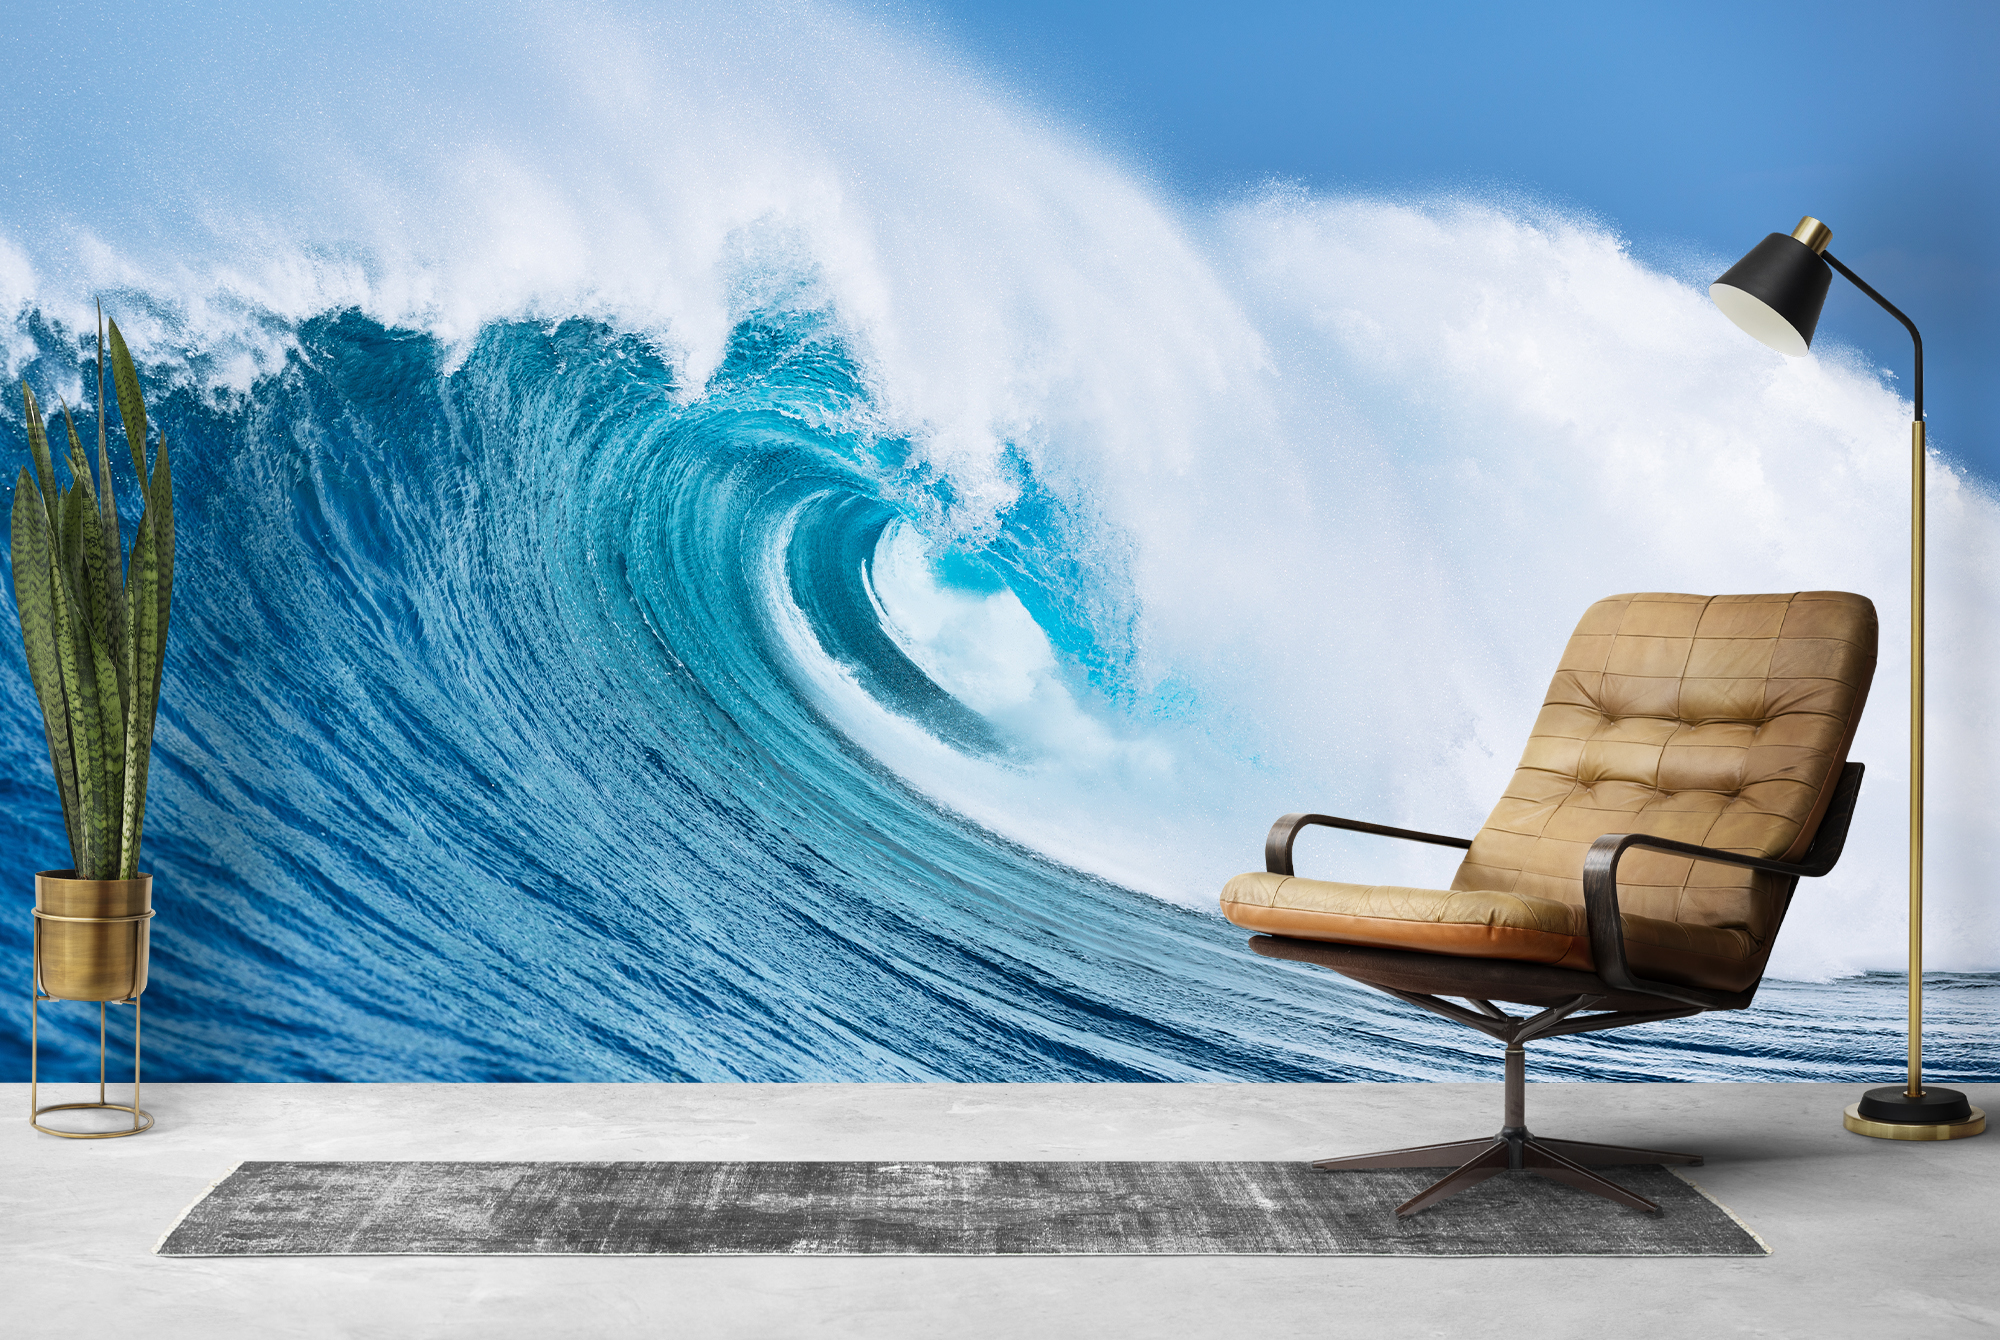 Giant Ocean Wave Wall Mural Wallpaper WS42373 eBay